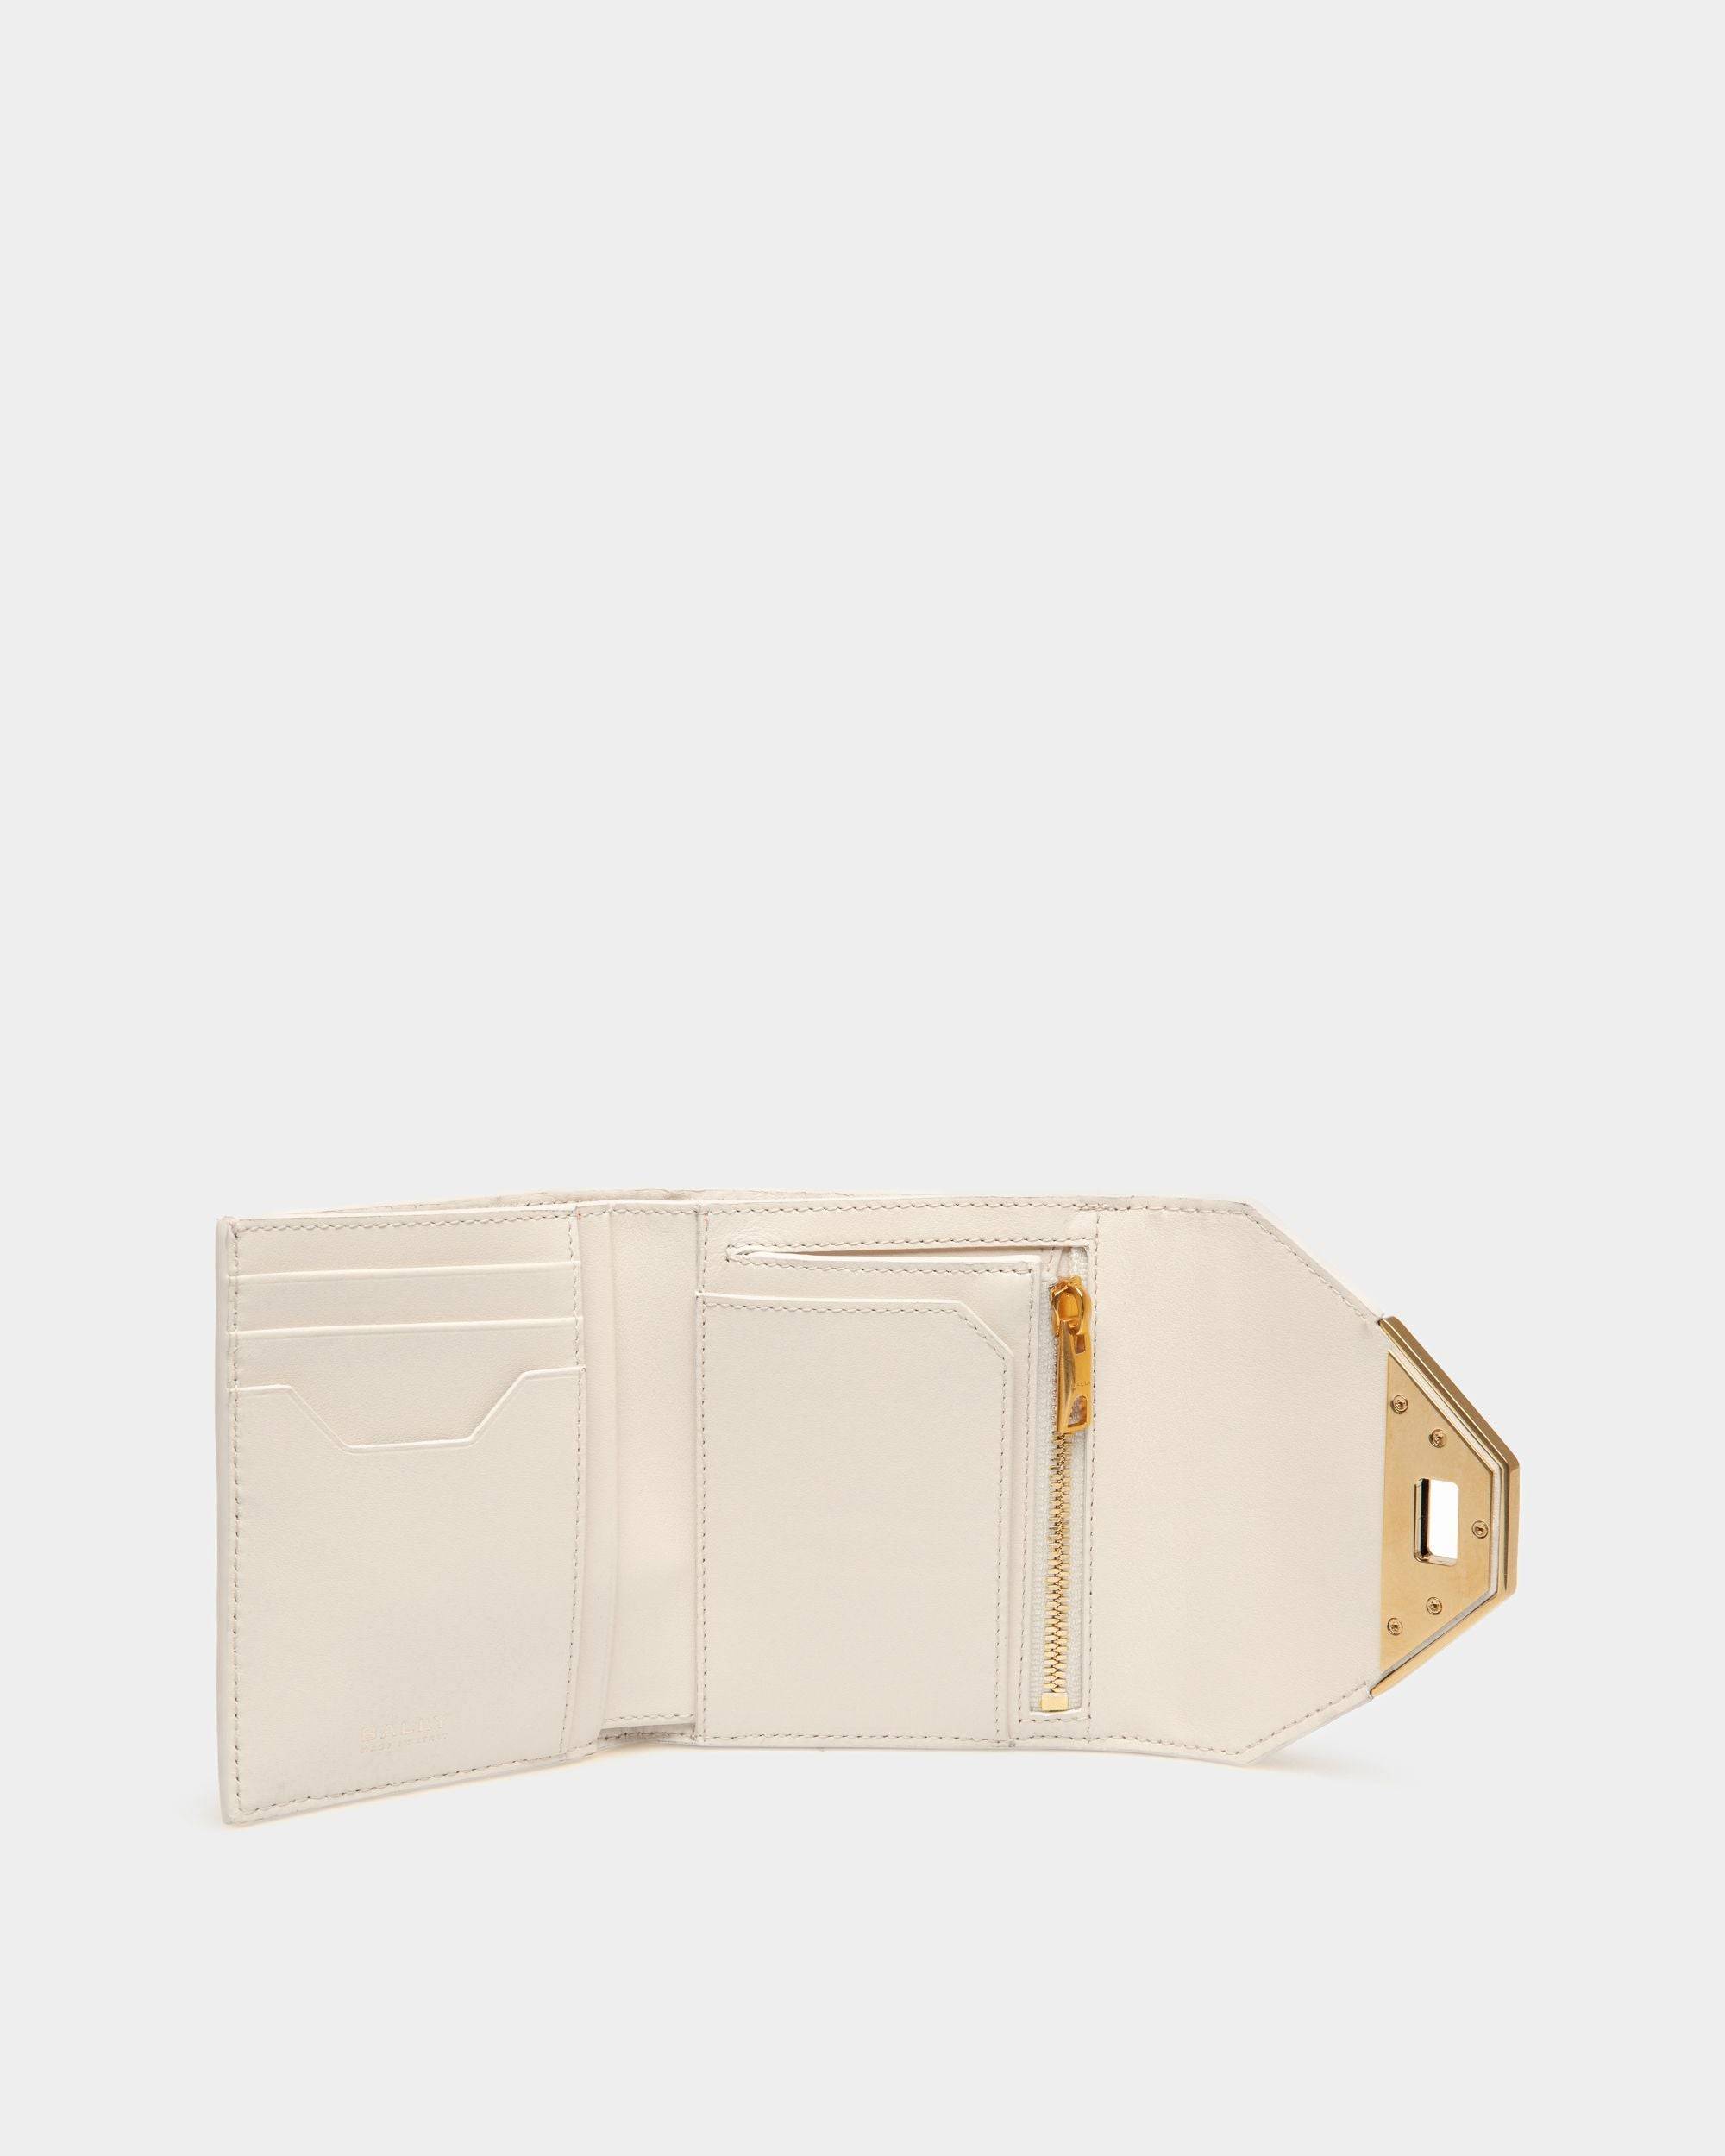 Tilt | Women's Wallet in White Crocodile Print Leather | Bally | Still Life Open / Inside